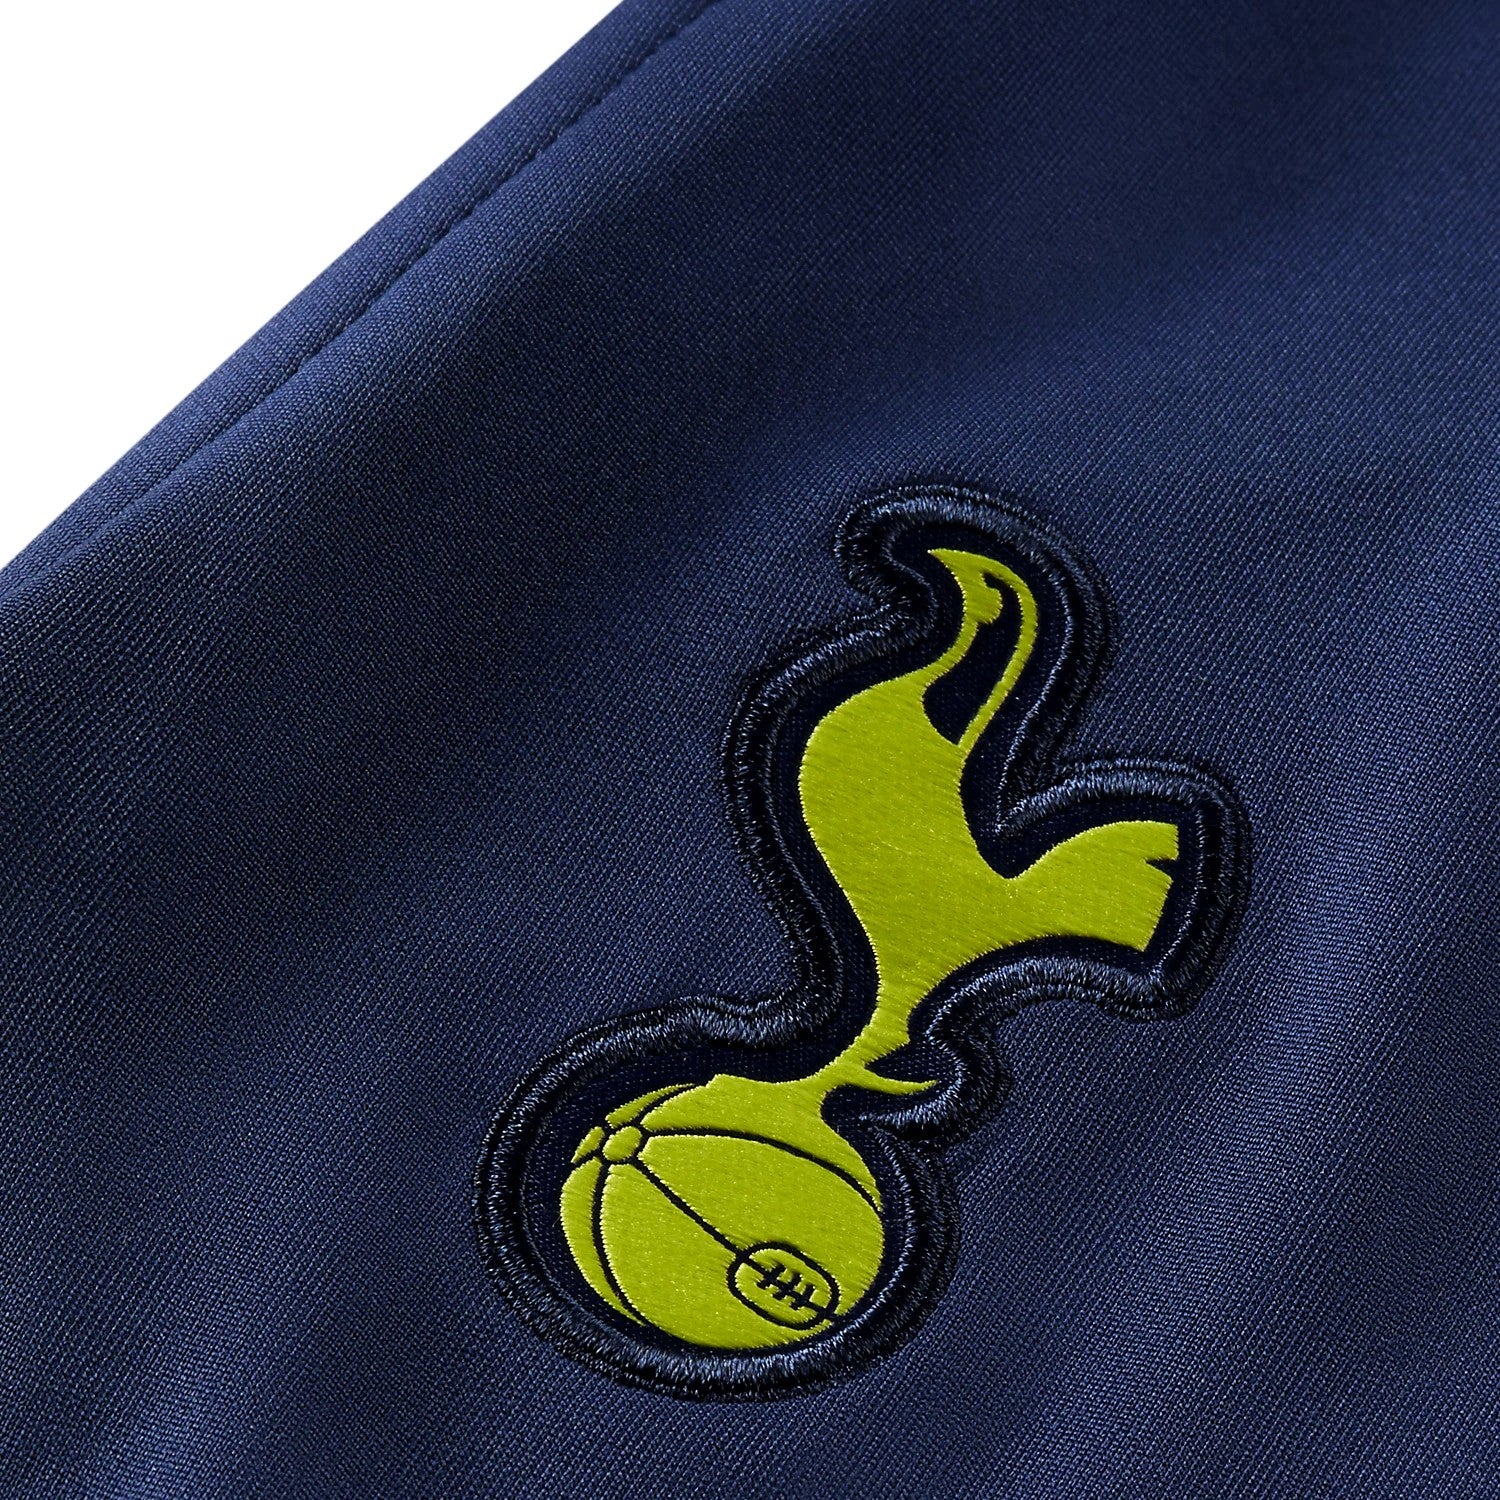 New Nike Tottenham 2020/21 kits: Leaked image of Spurs' brand new